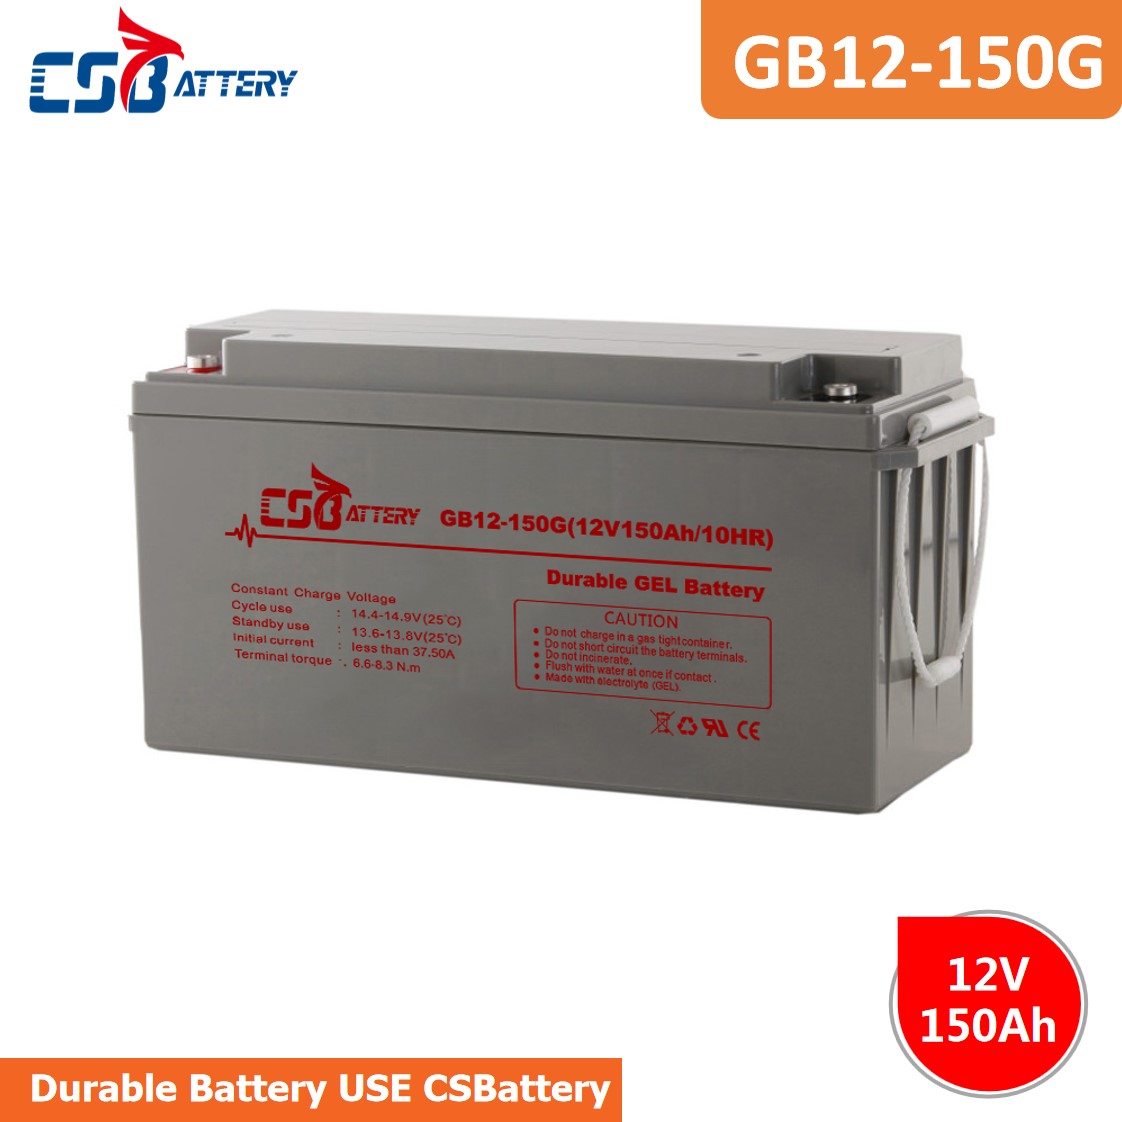 GB12-150G 12V 150Ah Durable Long Life Gel Battery